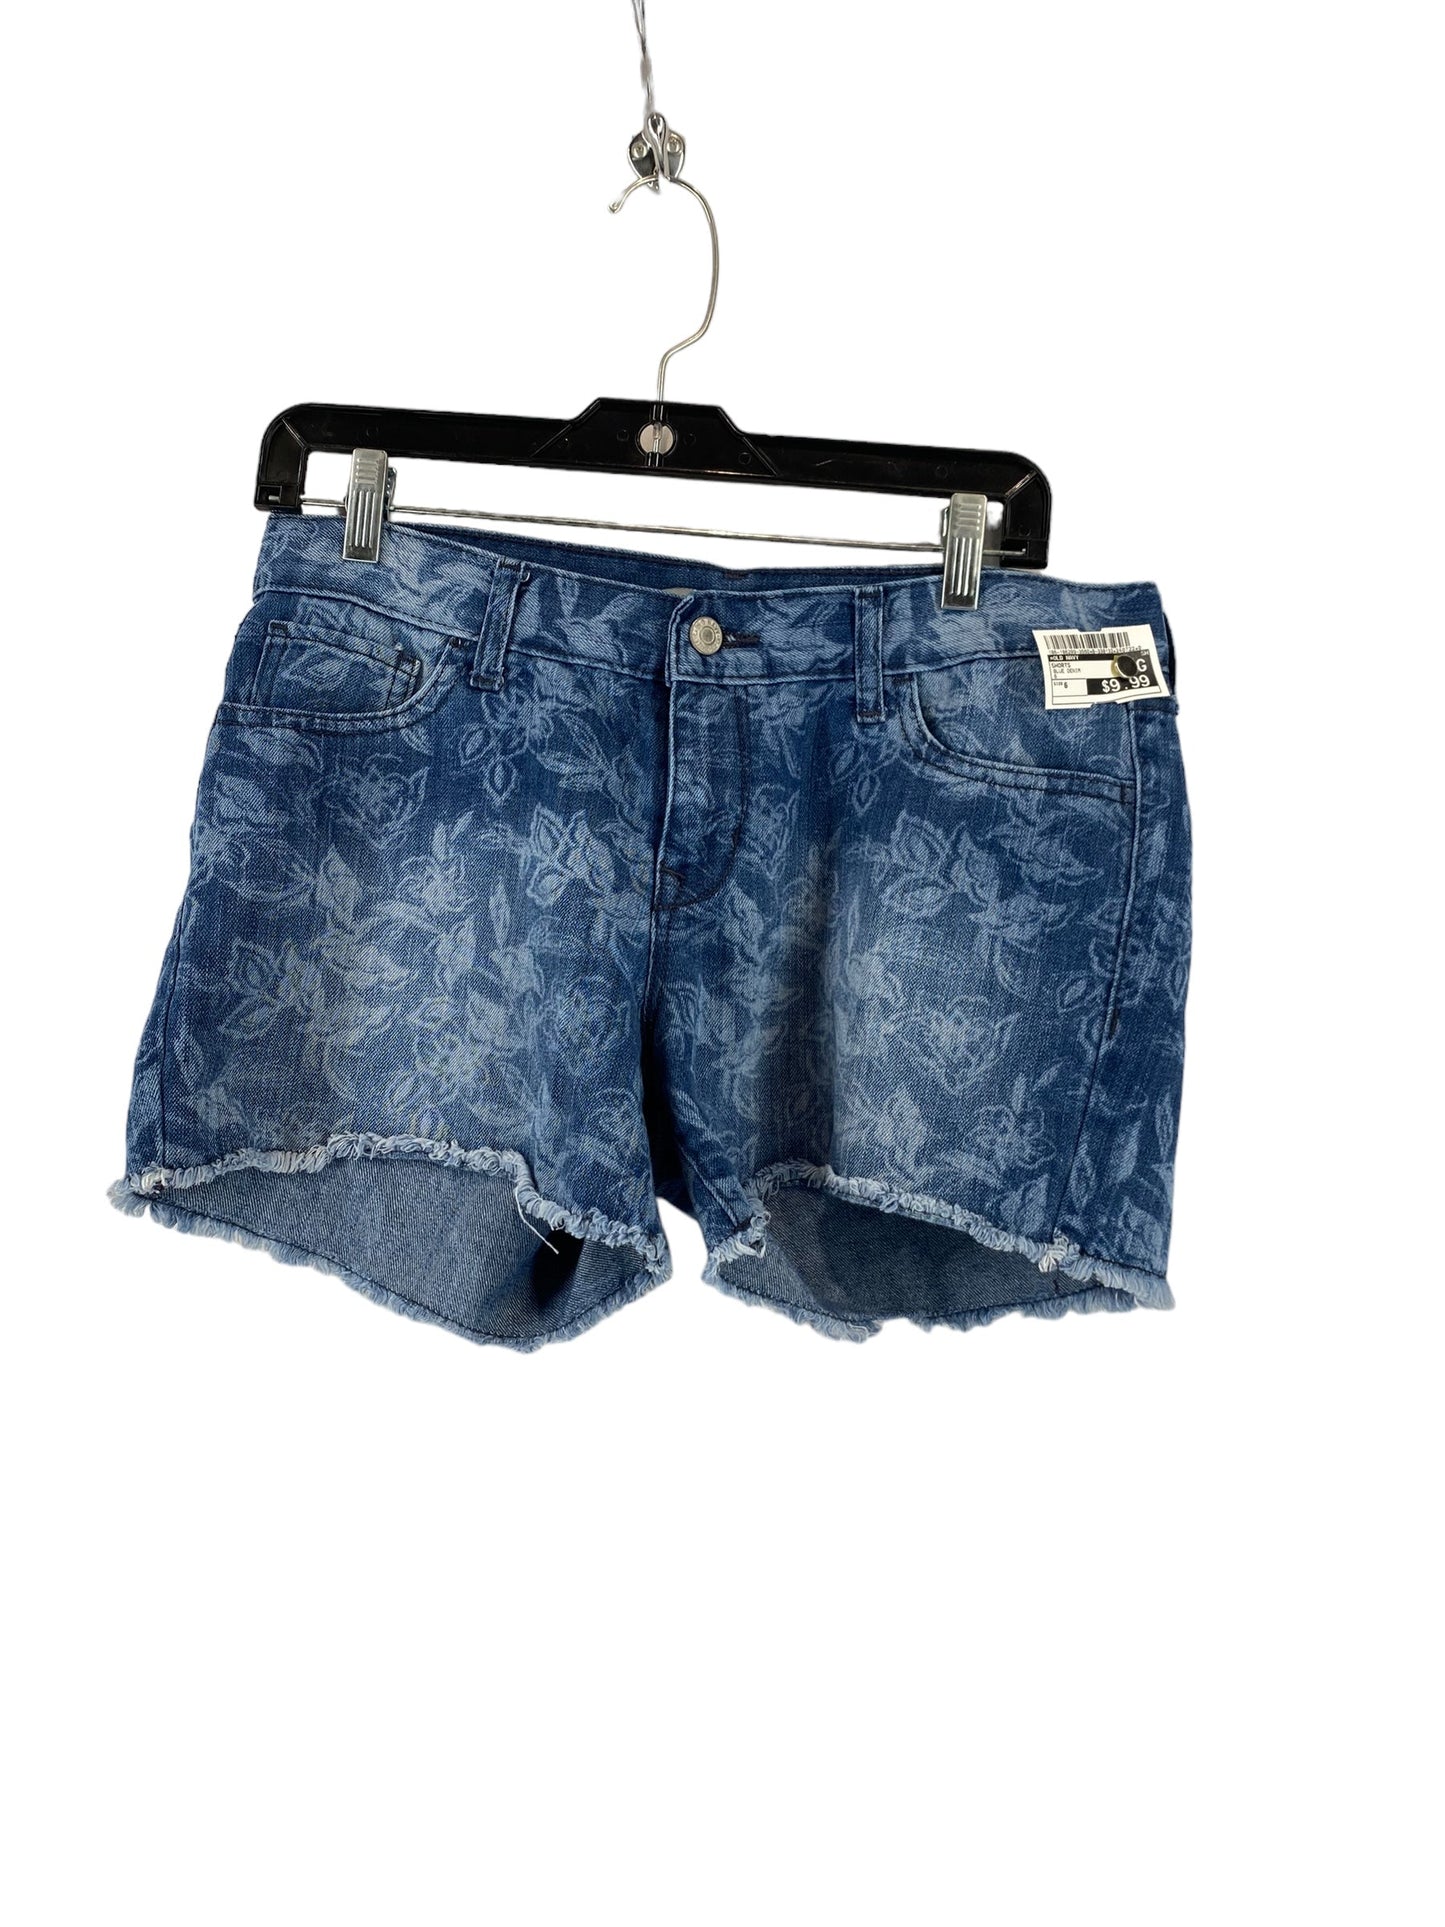 Blue Denim Shorts Old Navy, Size 6